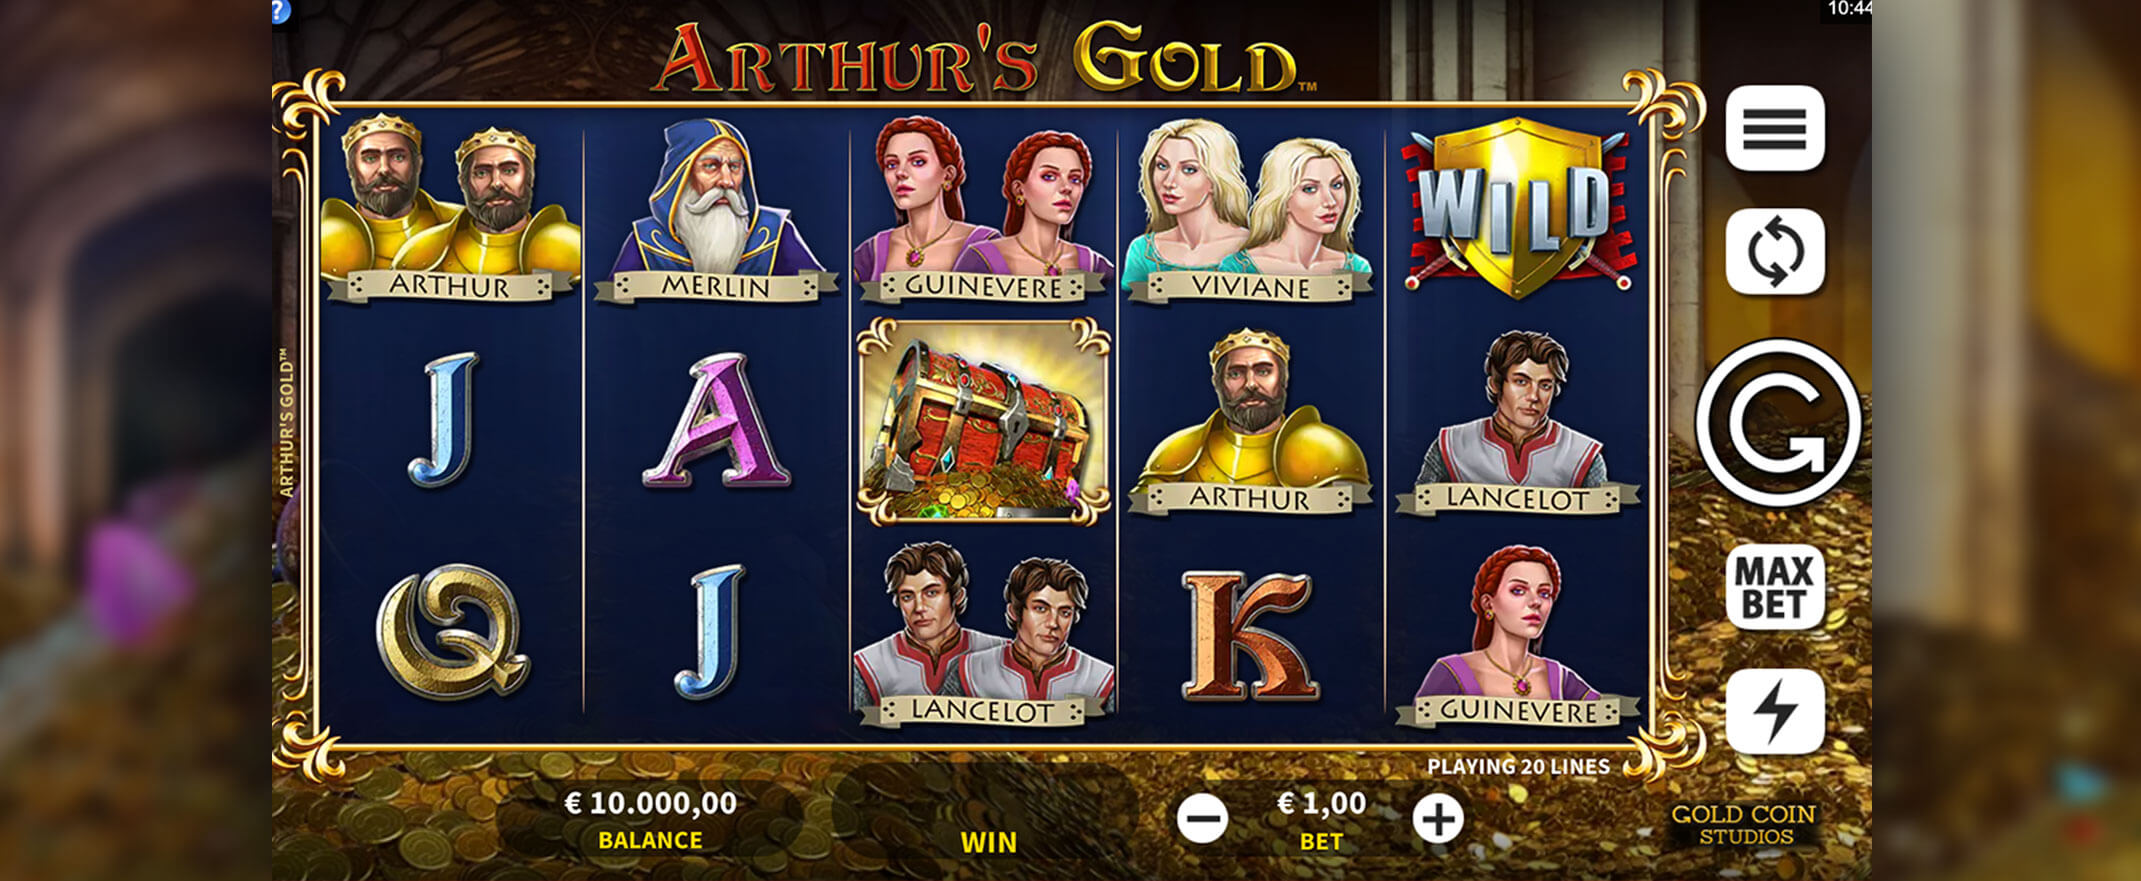 Arthur's Gold Slot Screenshot